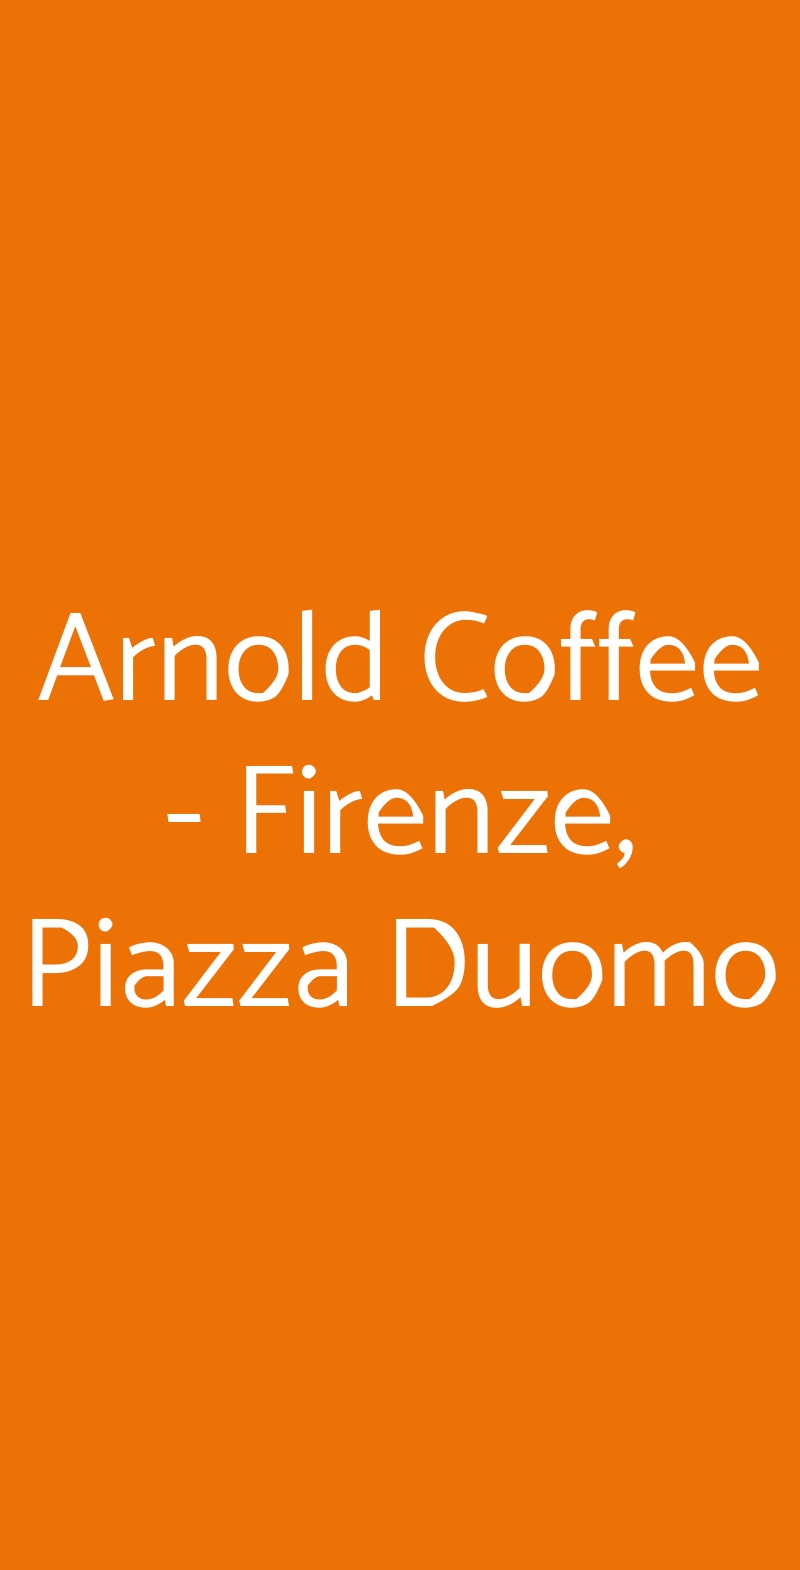 Arnold Coffee - Firenze, Piazza Duomo Firenze menù 1 pagina